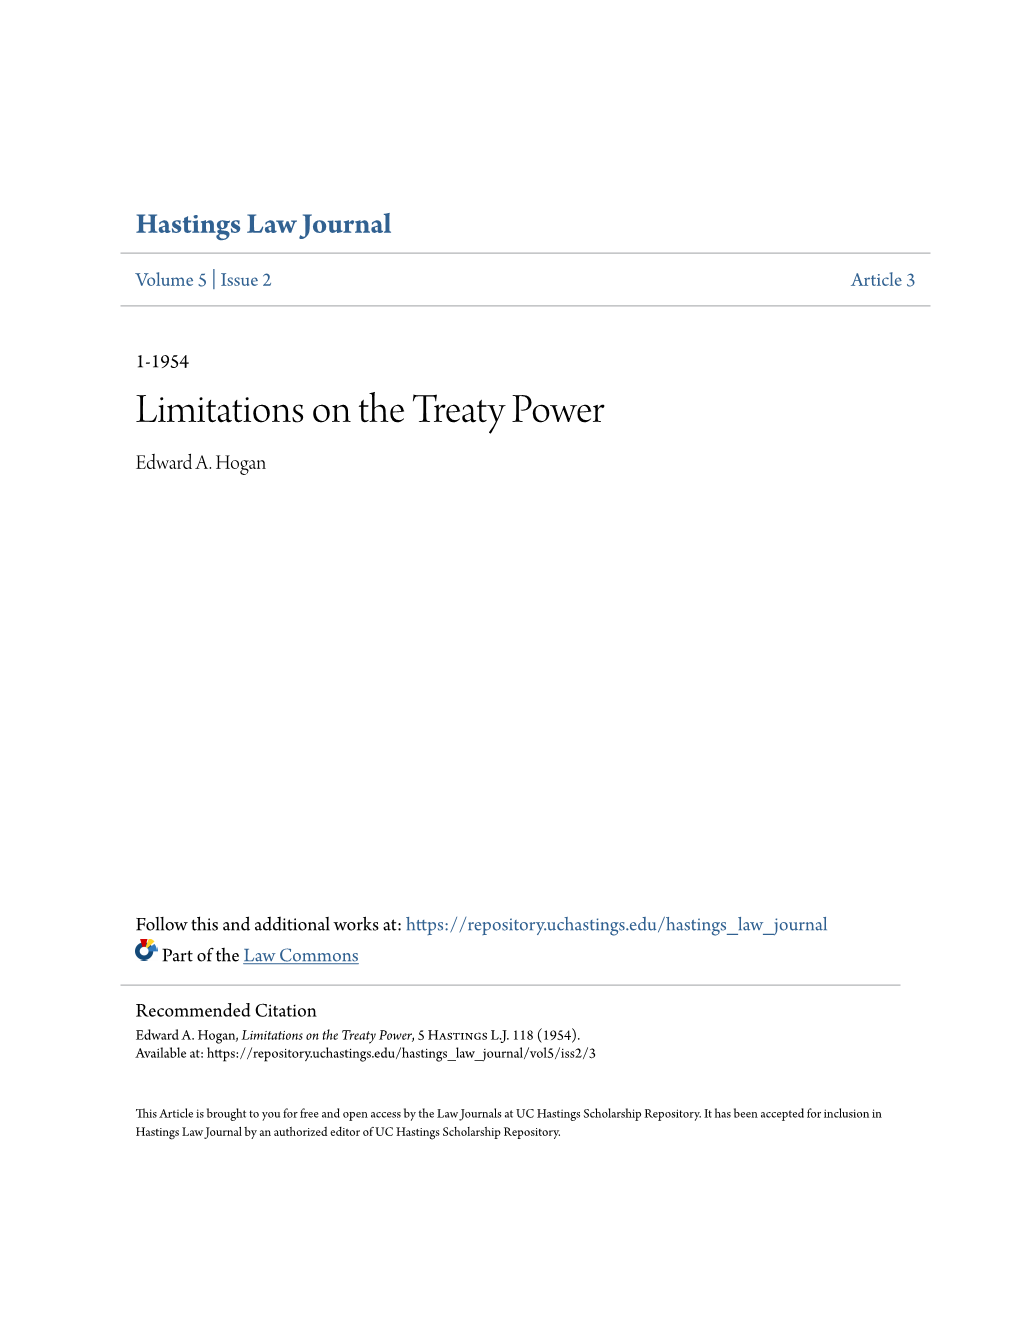 Limitations on the Treaty Power Edward A